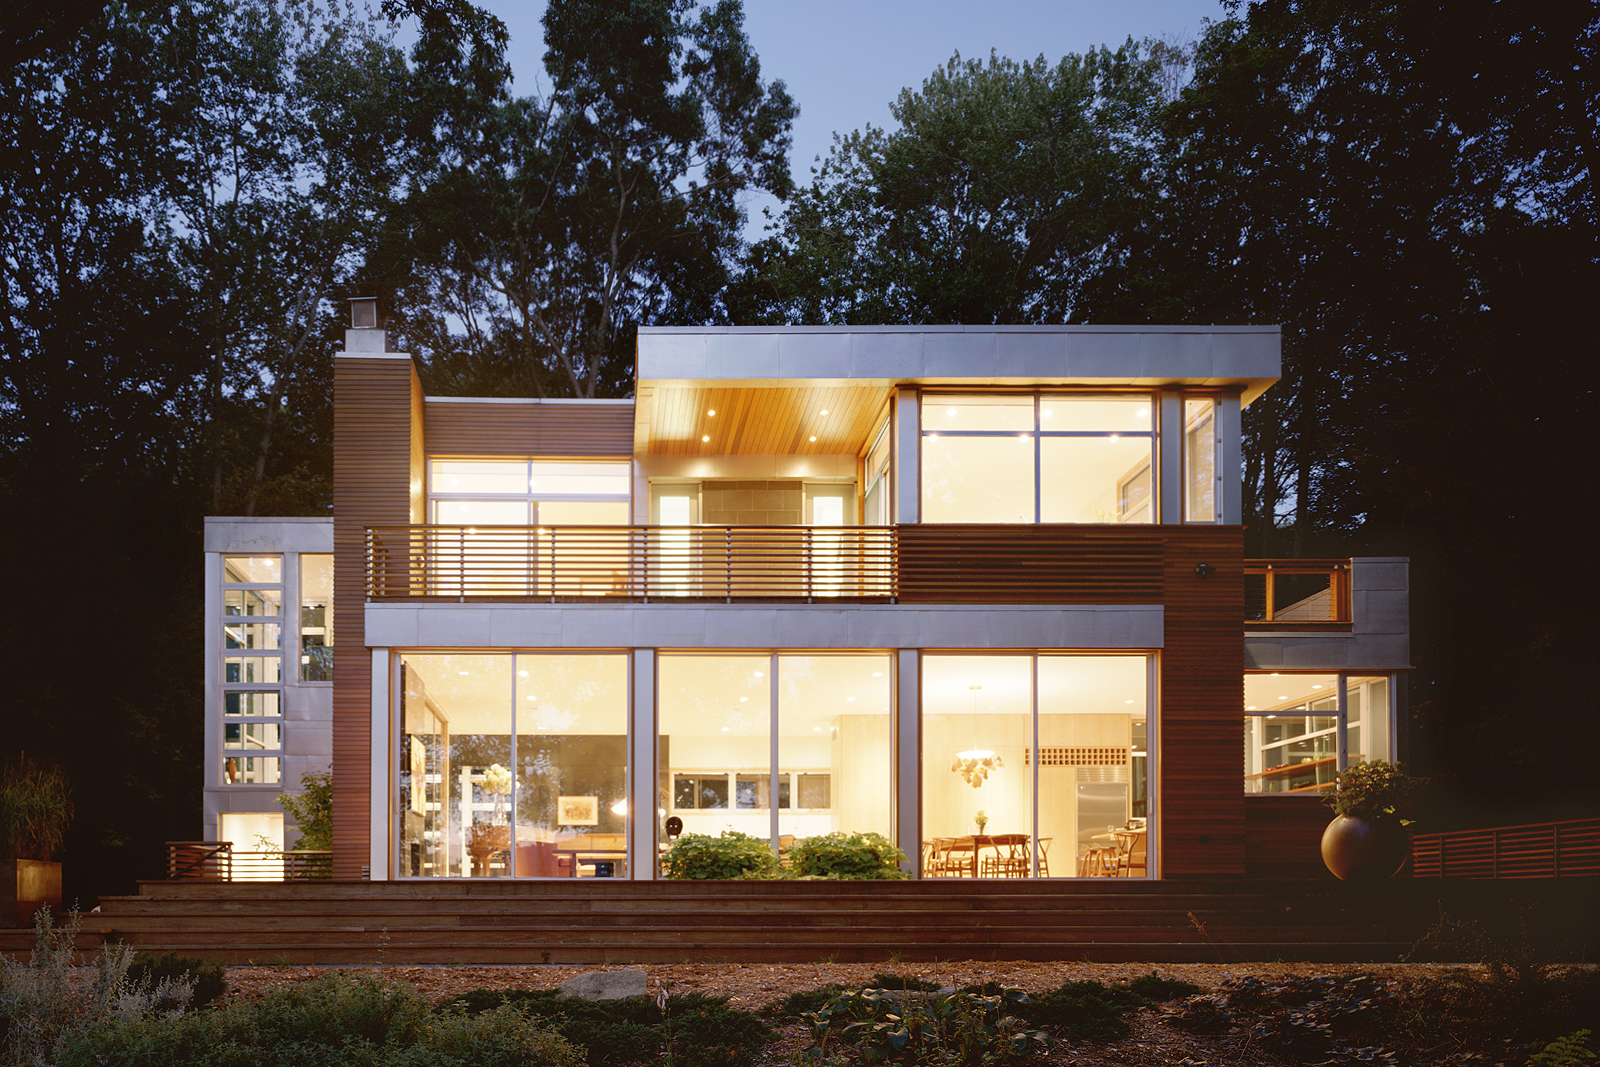 02-res4-resolution-4-architecture-modern-home-residential-lakeside-house-exterior-dusk.JPG